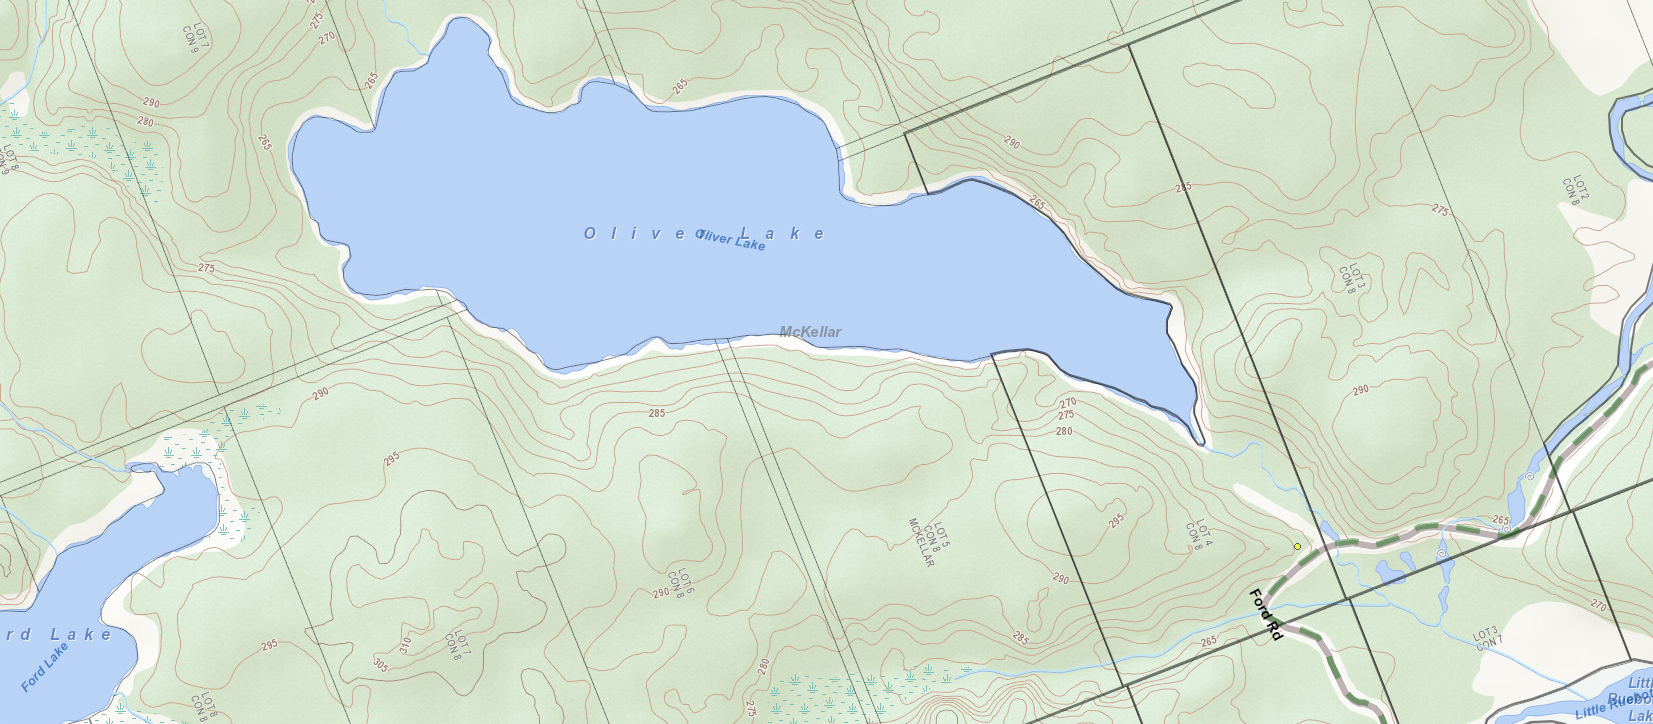 Oliver Lake Cadastral Map - Oliver Lake - Muskoka